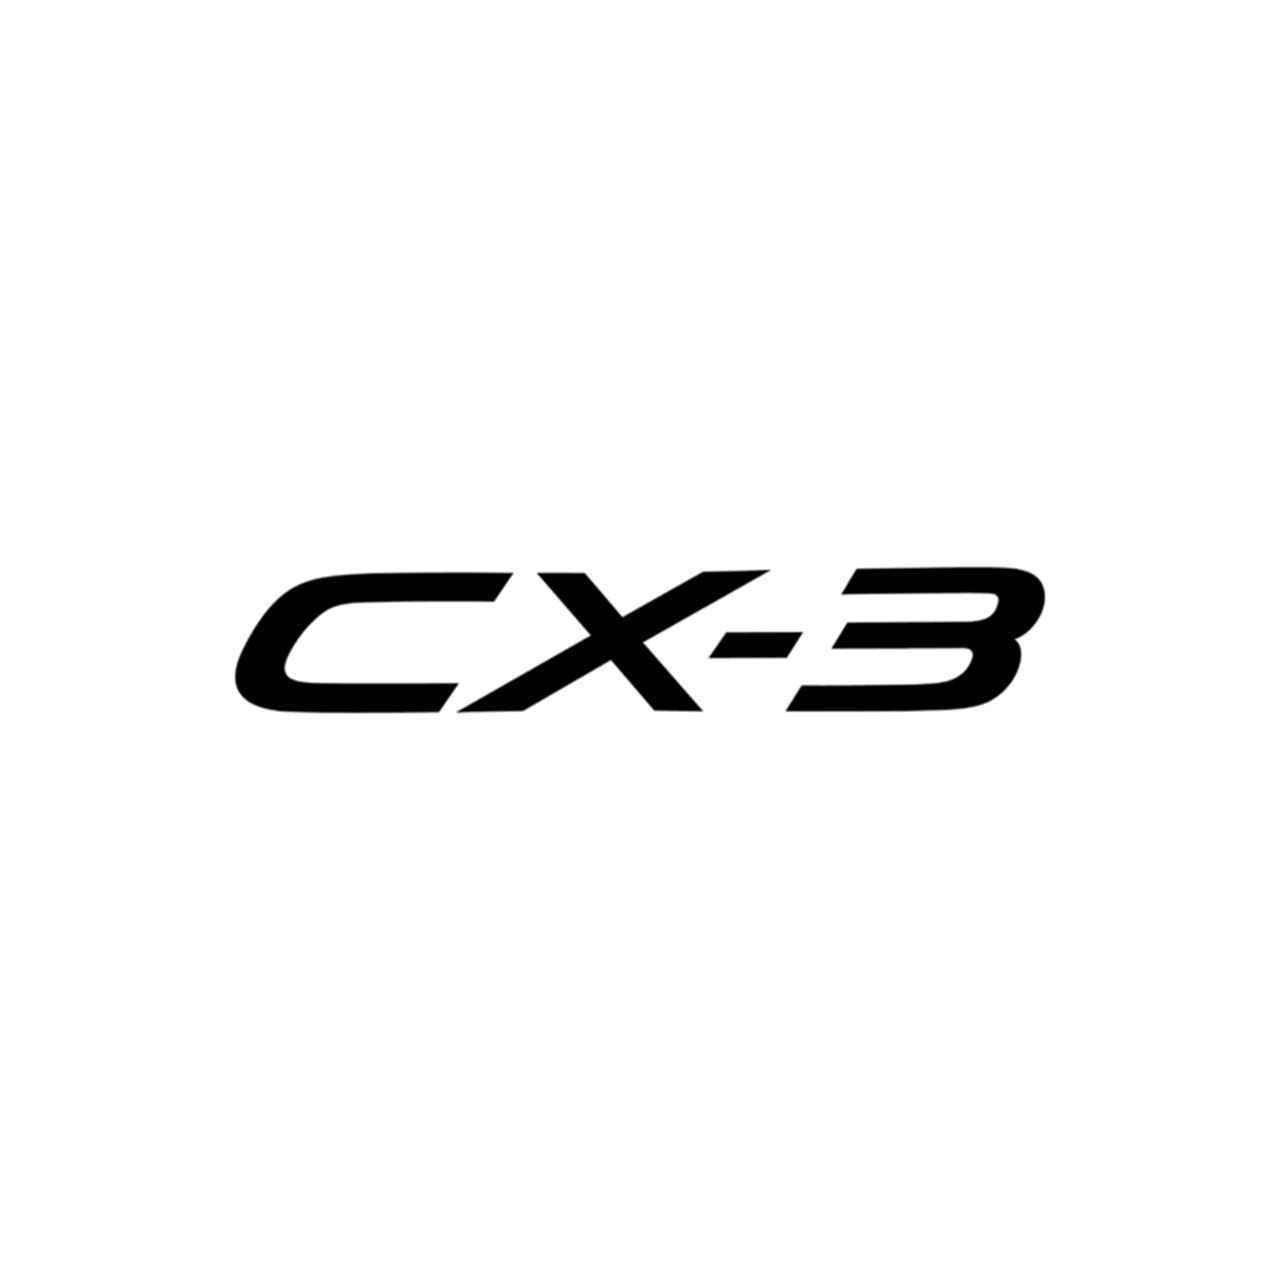 CX3 Logo - Mazda Cx 3 Logo Vinyl Decal